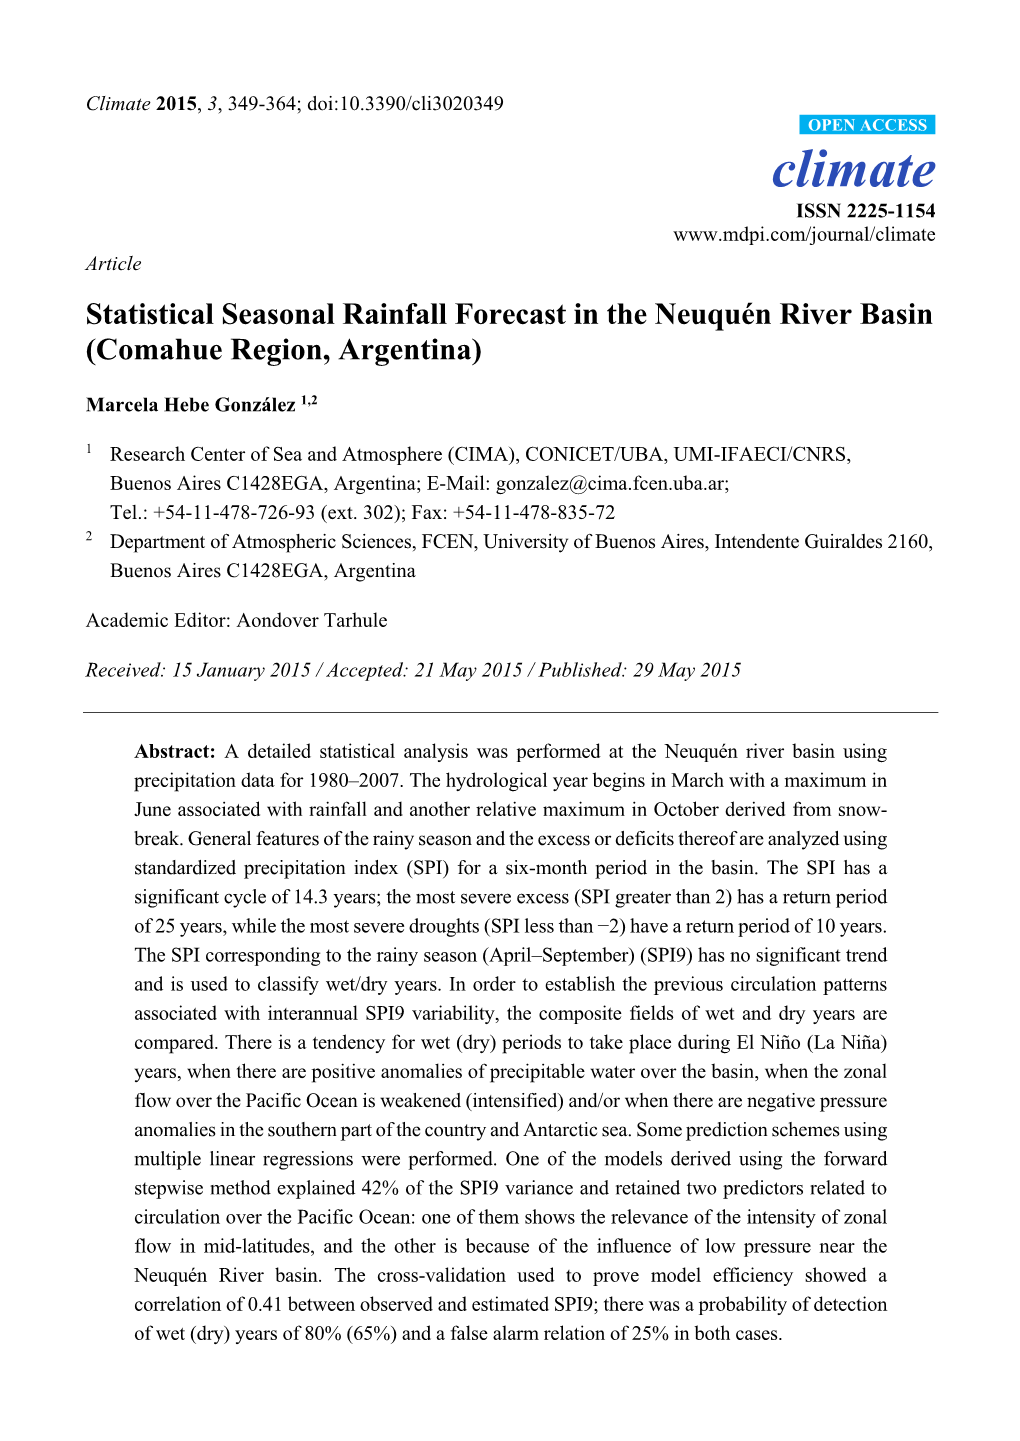 Statistical Seasonal Rainfall Forecast in the Neuquén River Basin (Comahue Region, Argentina)